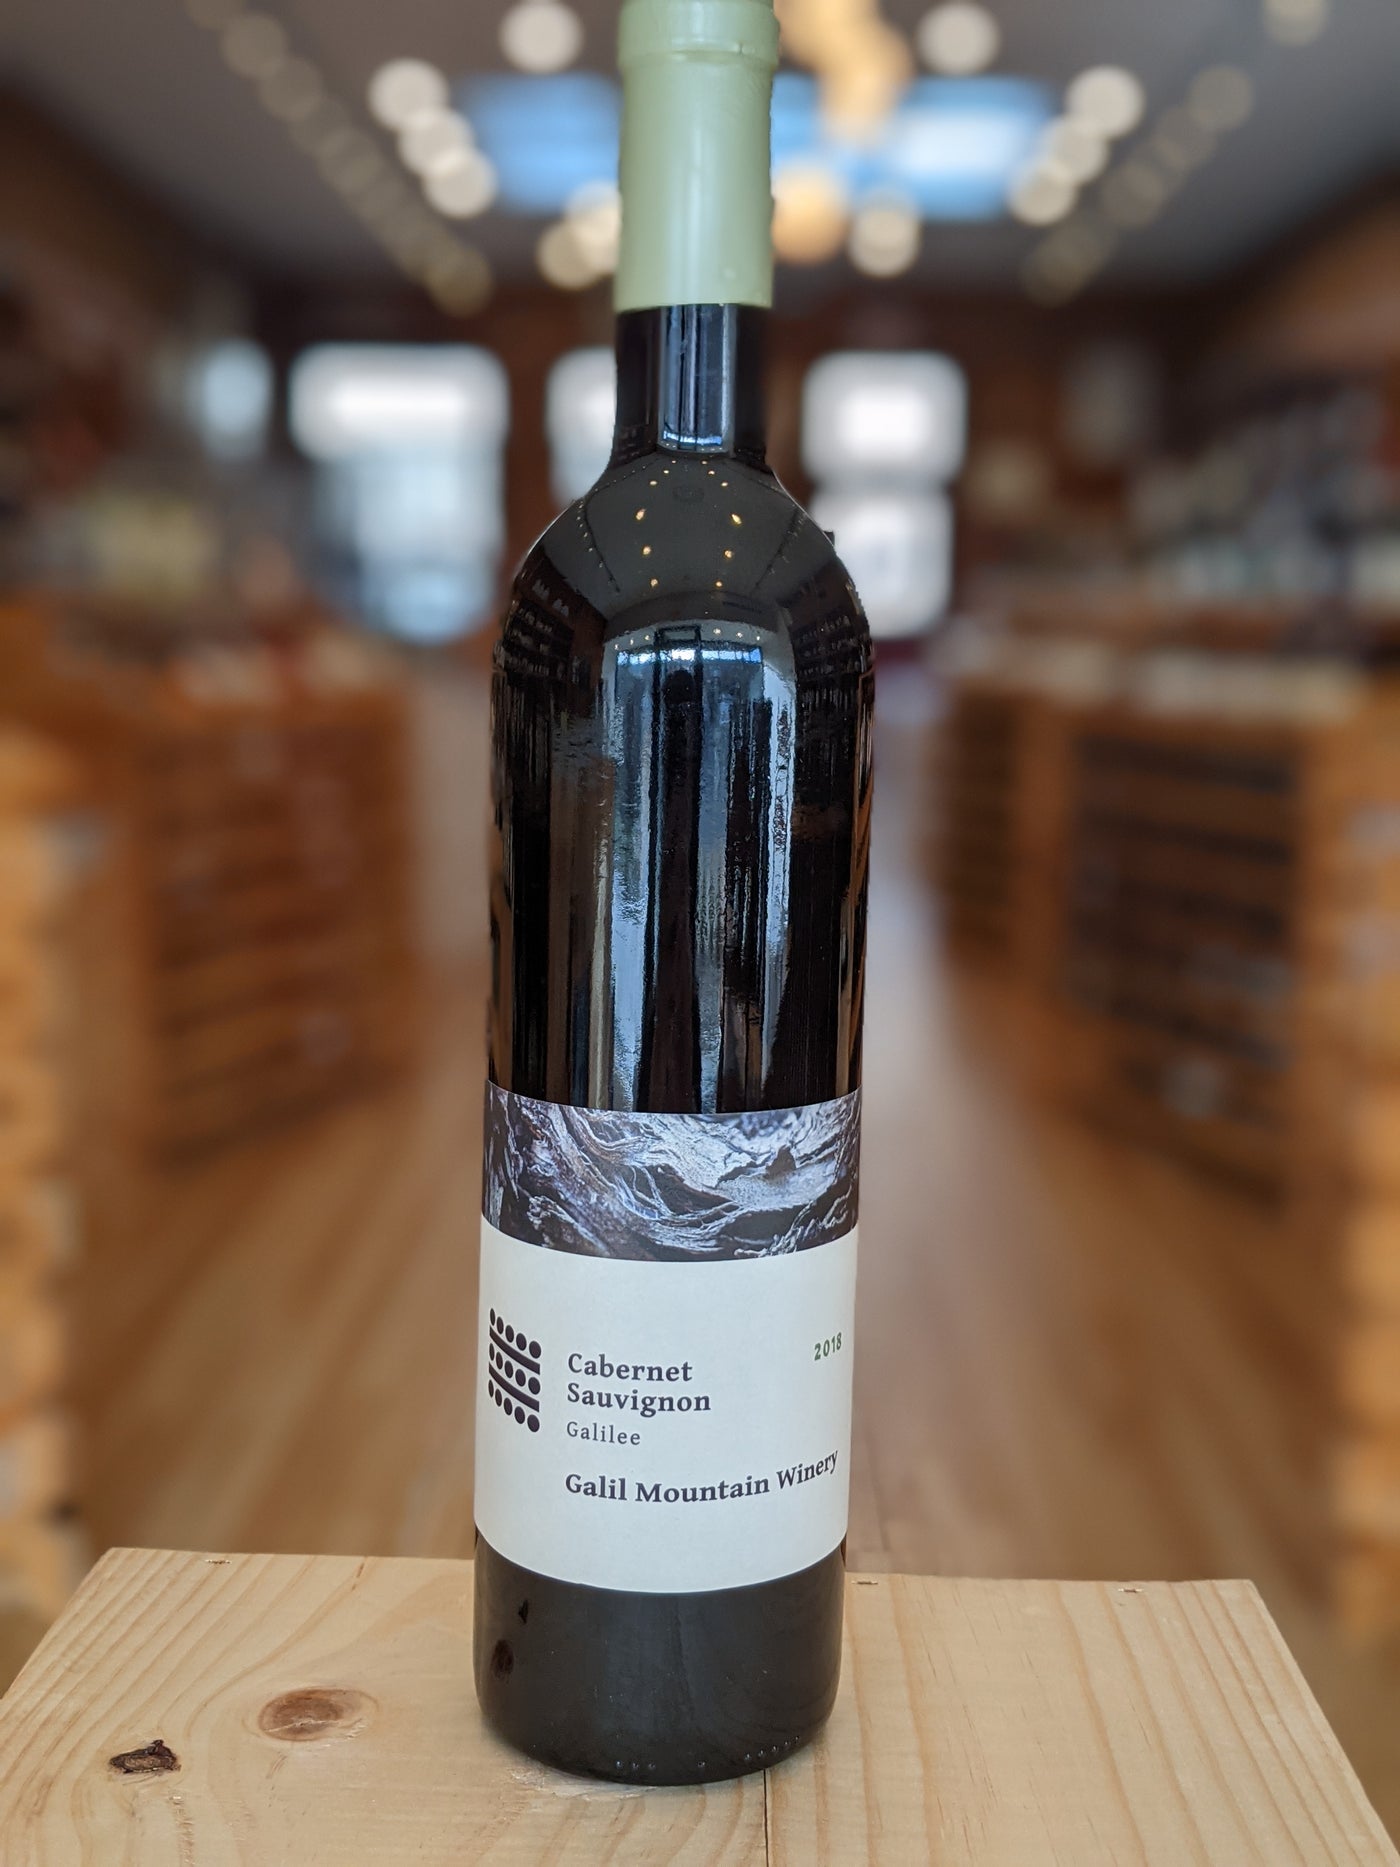 Galil Mountain Winery Cabernet Sauvignon 2018